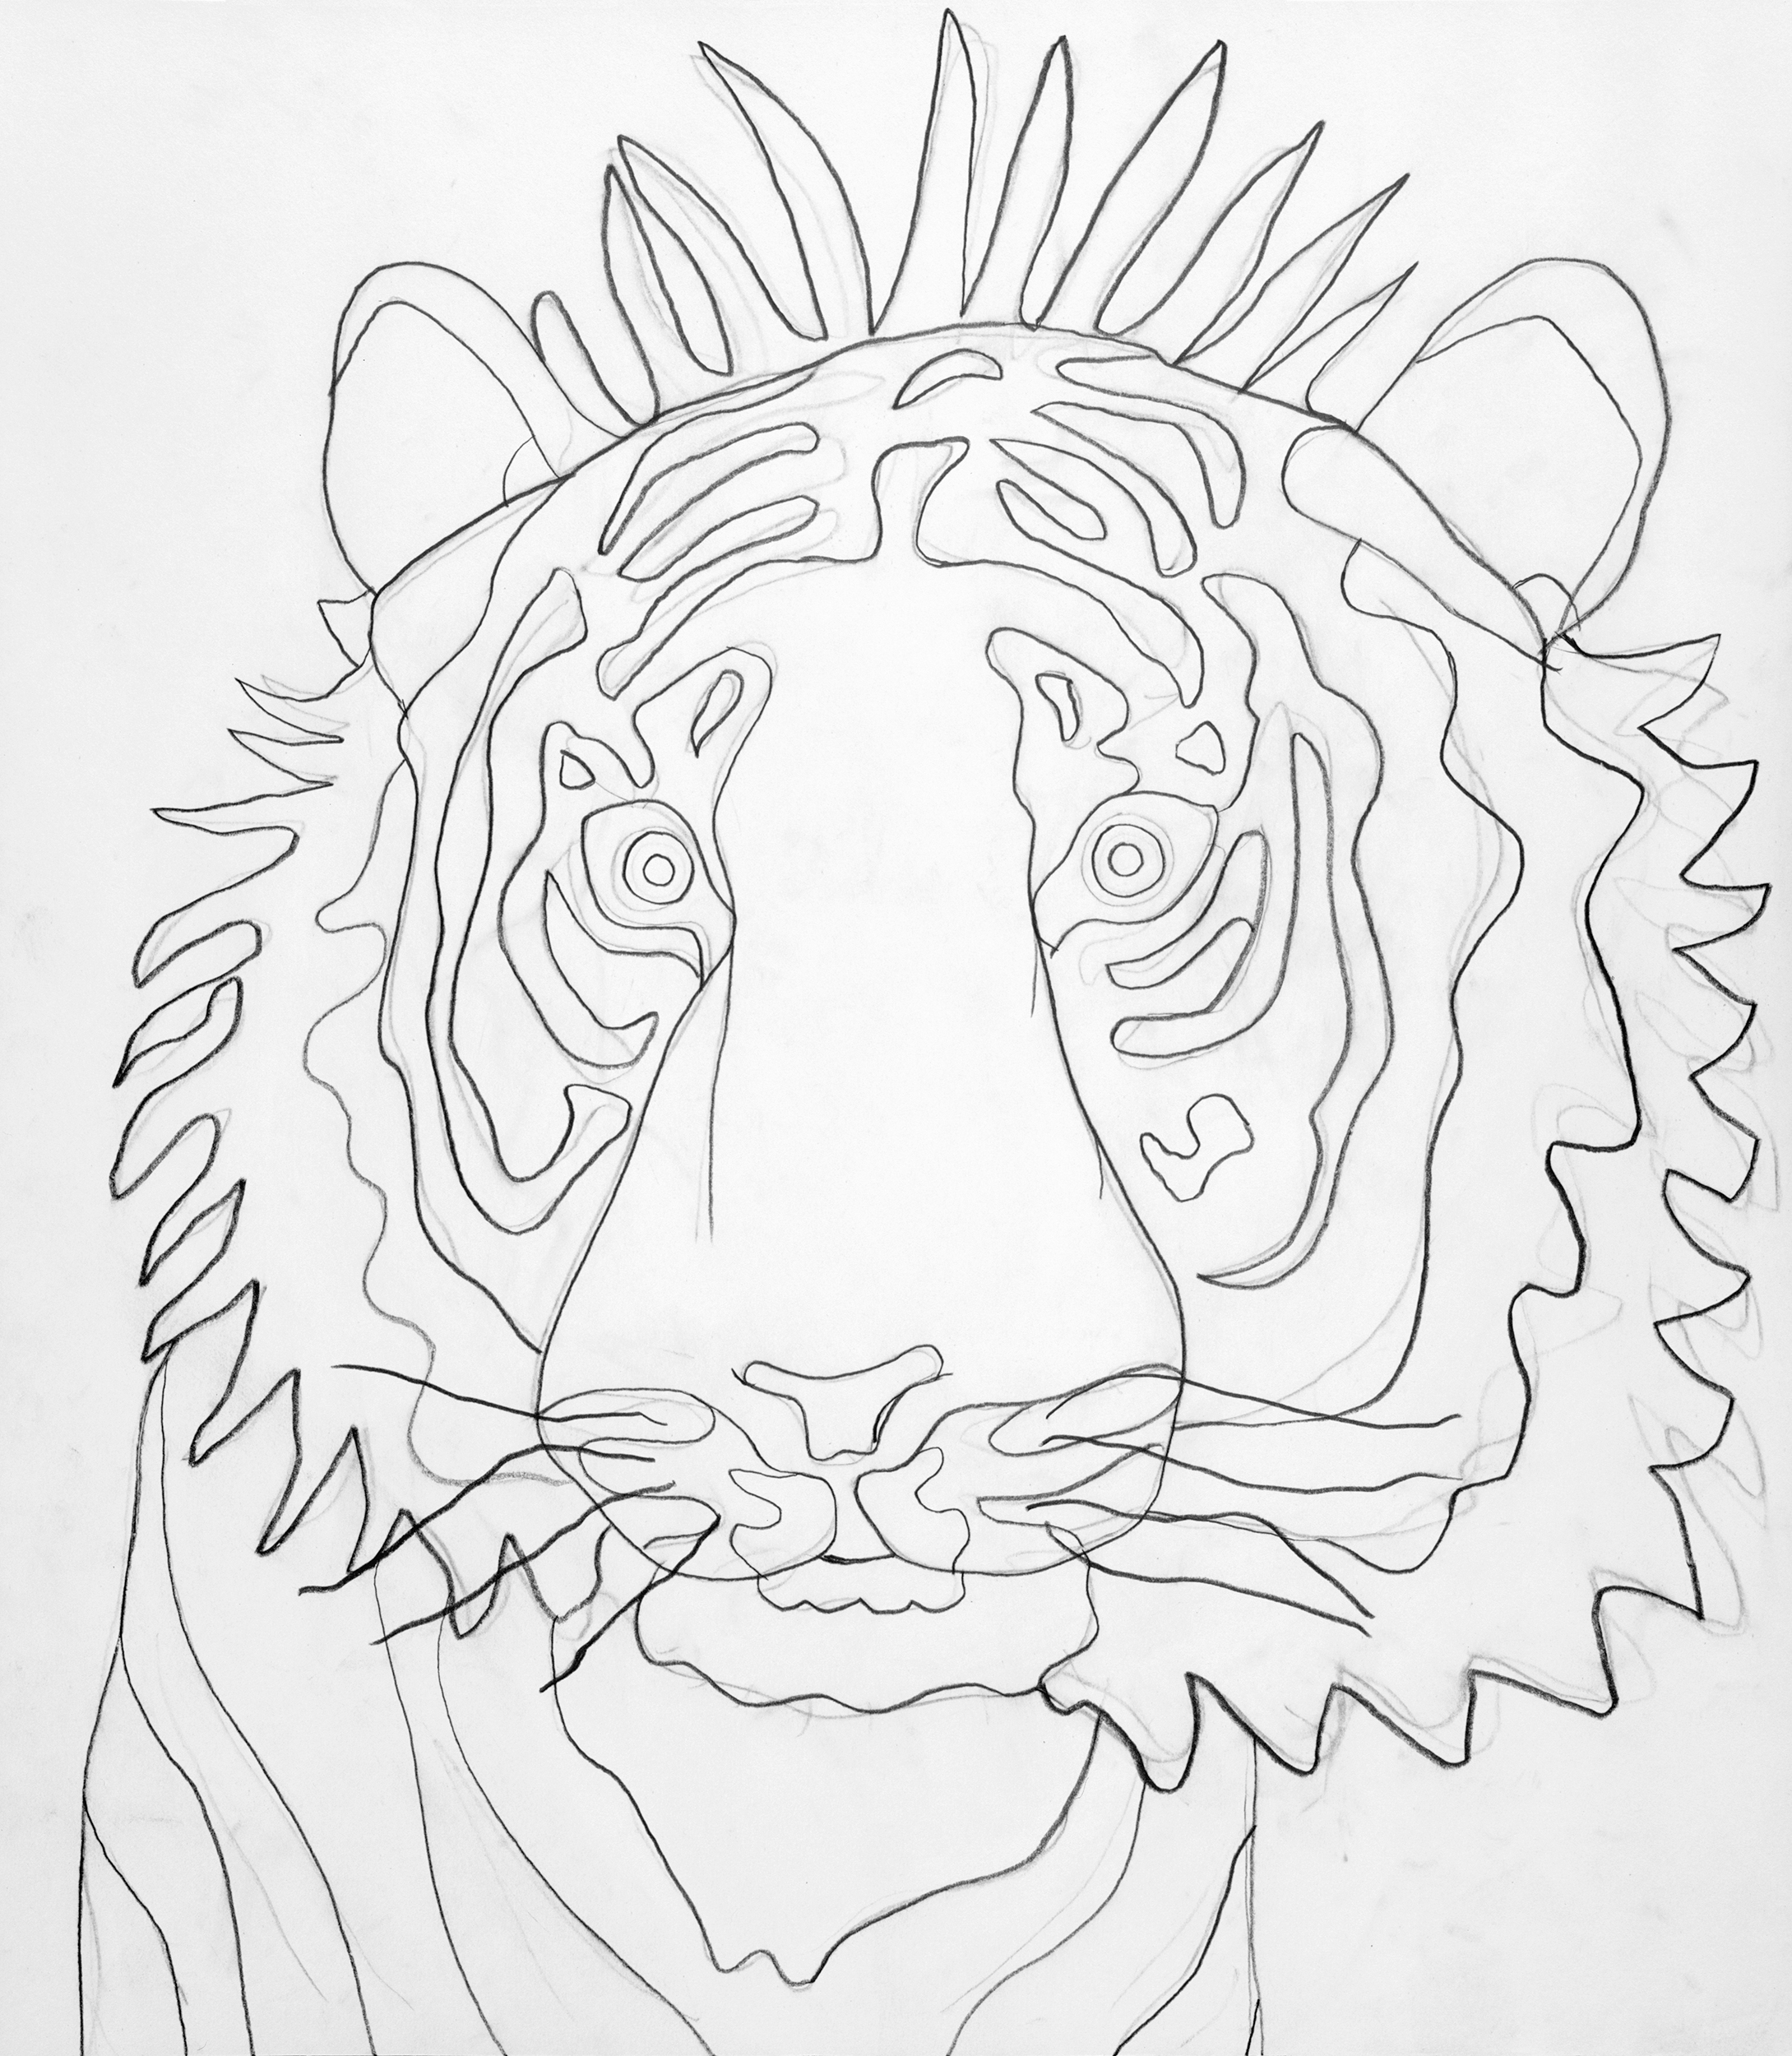 Tiger III, drawing by Wouter van Riessen